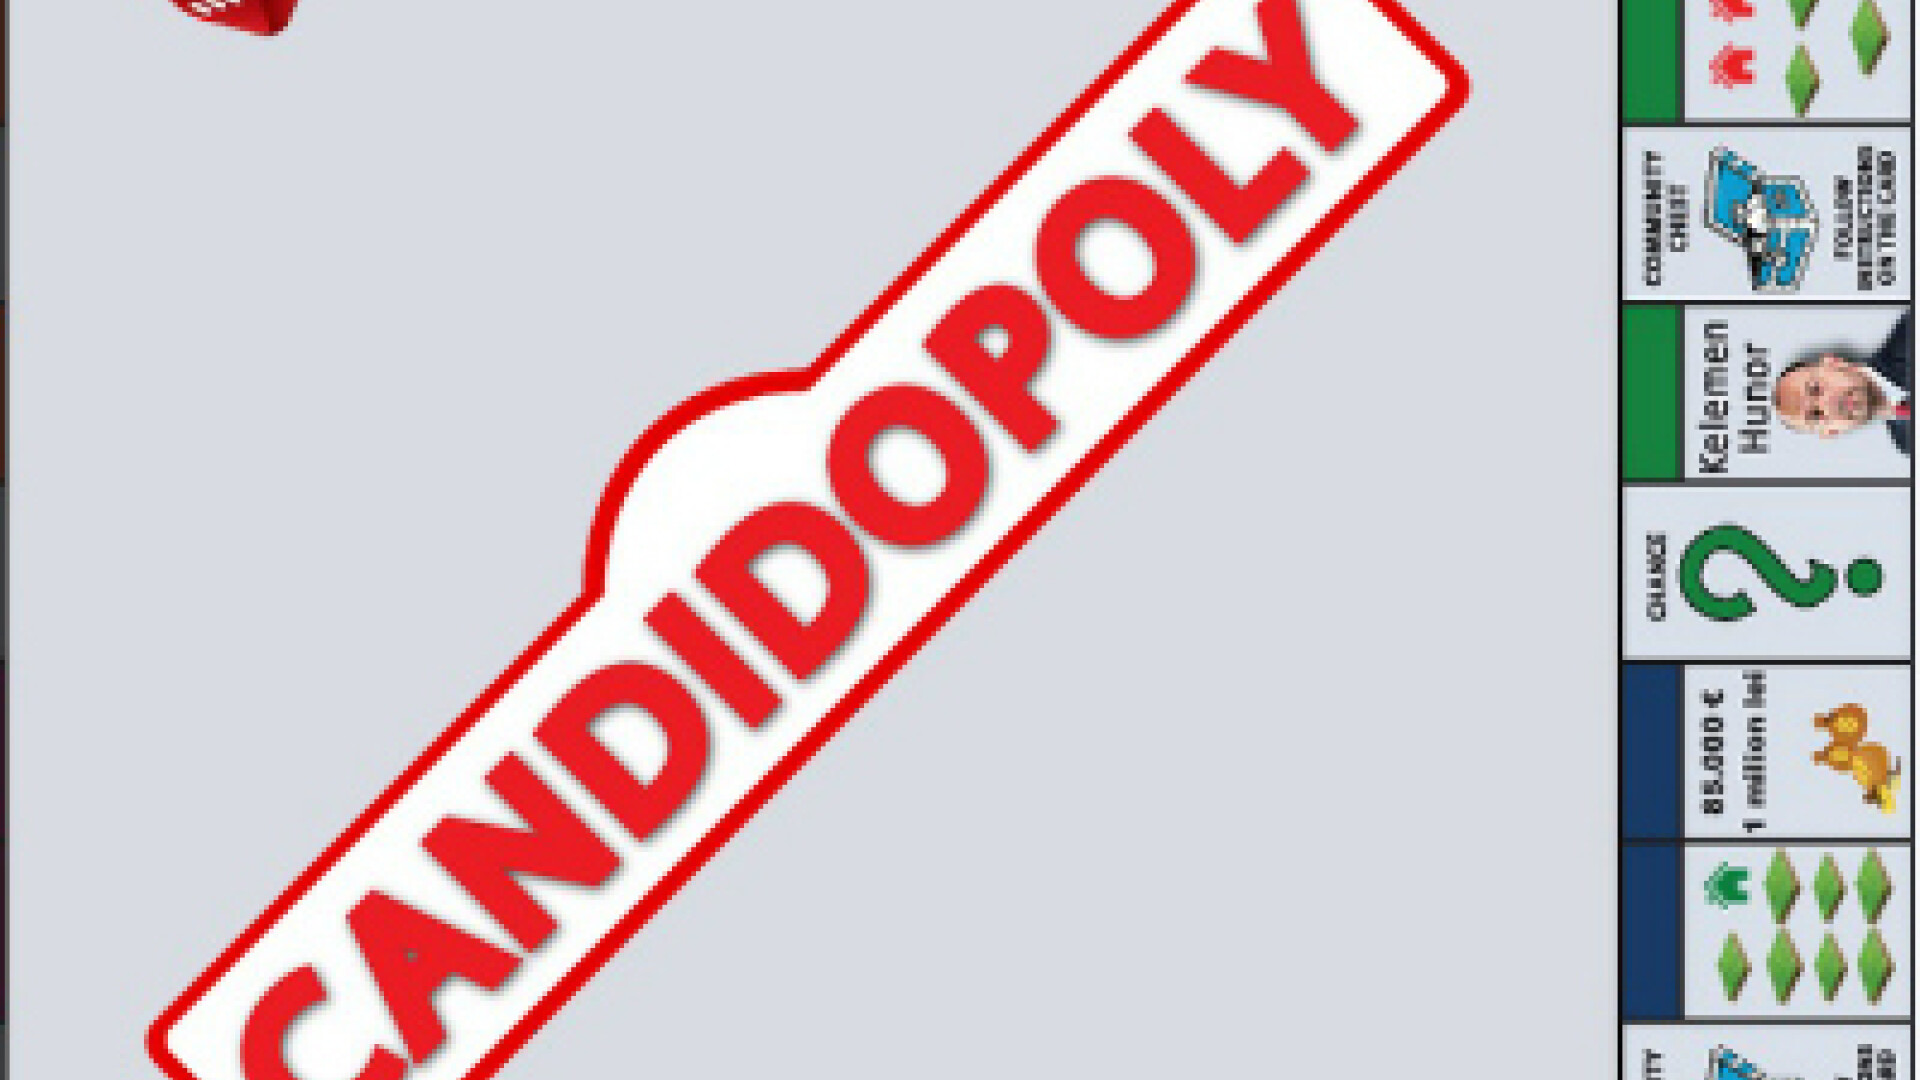 Candidopoly